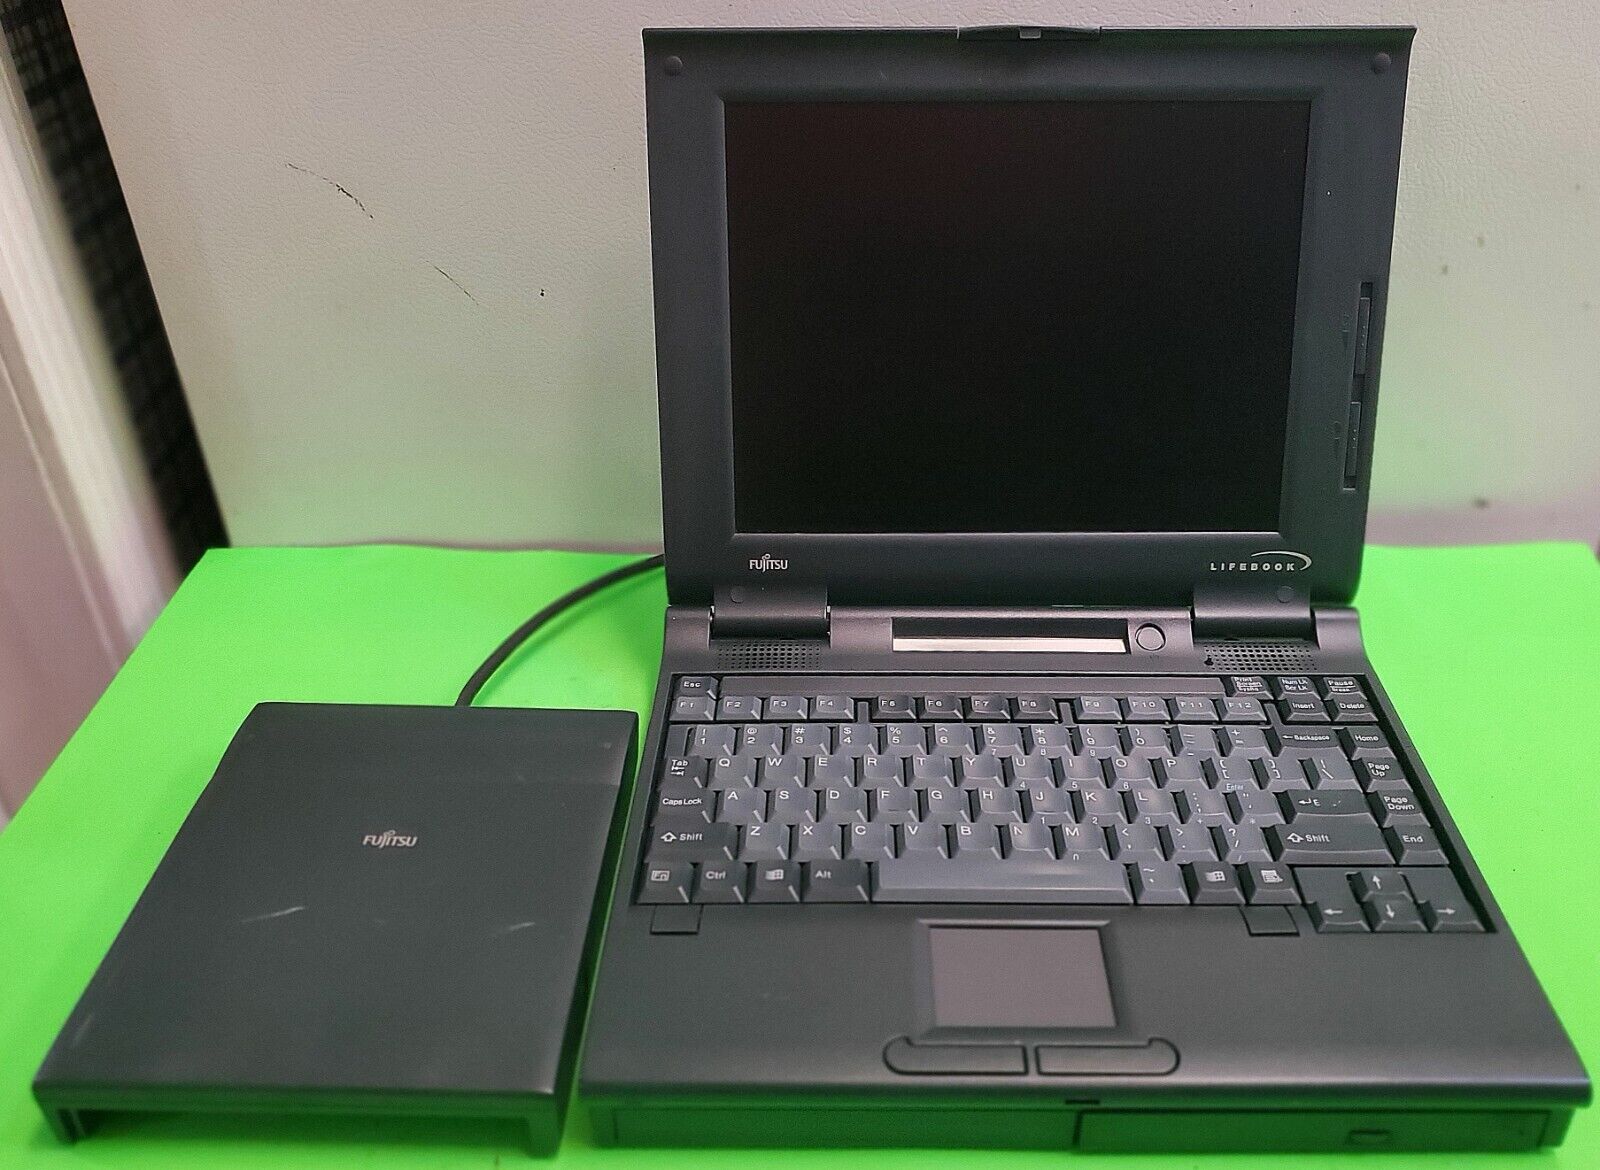 Rare Fujitsu Lifebook 520D Retro Laptop Computer - Untested